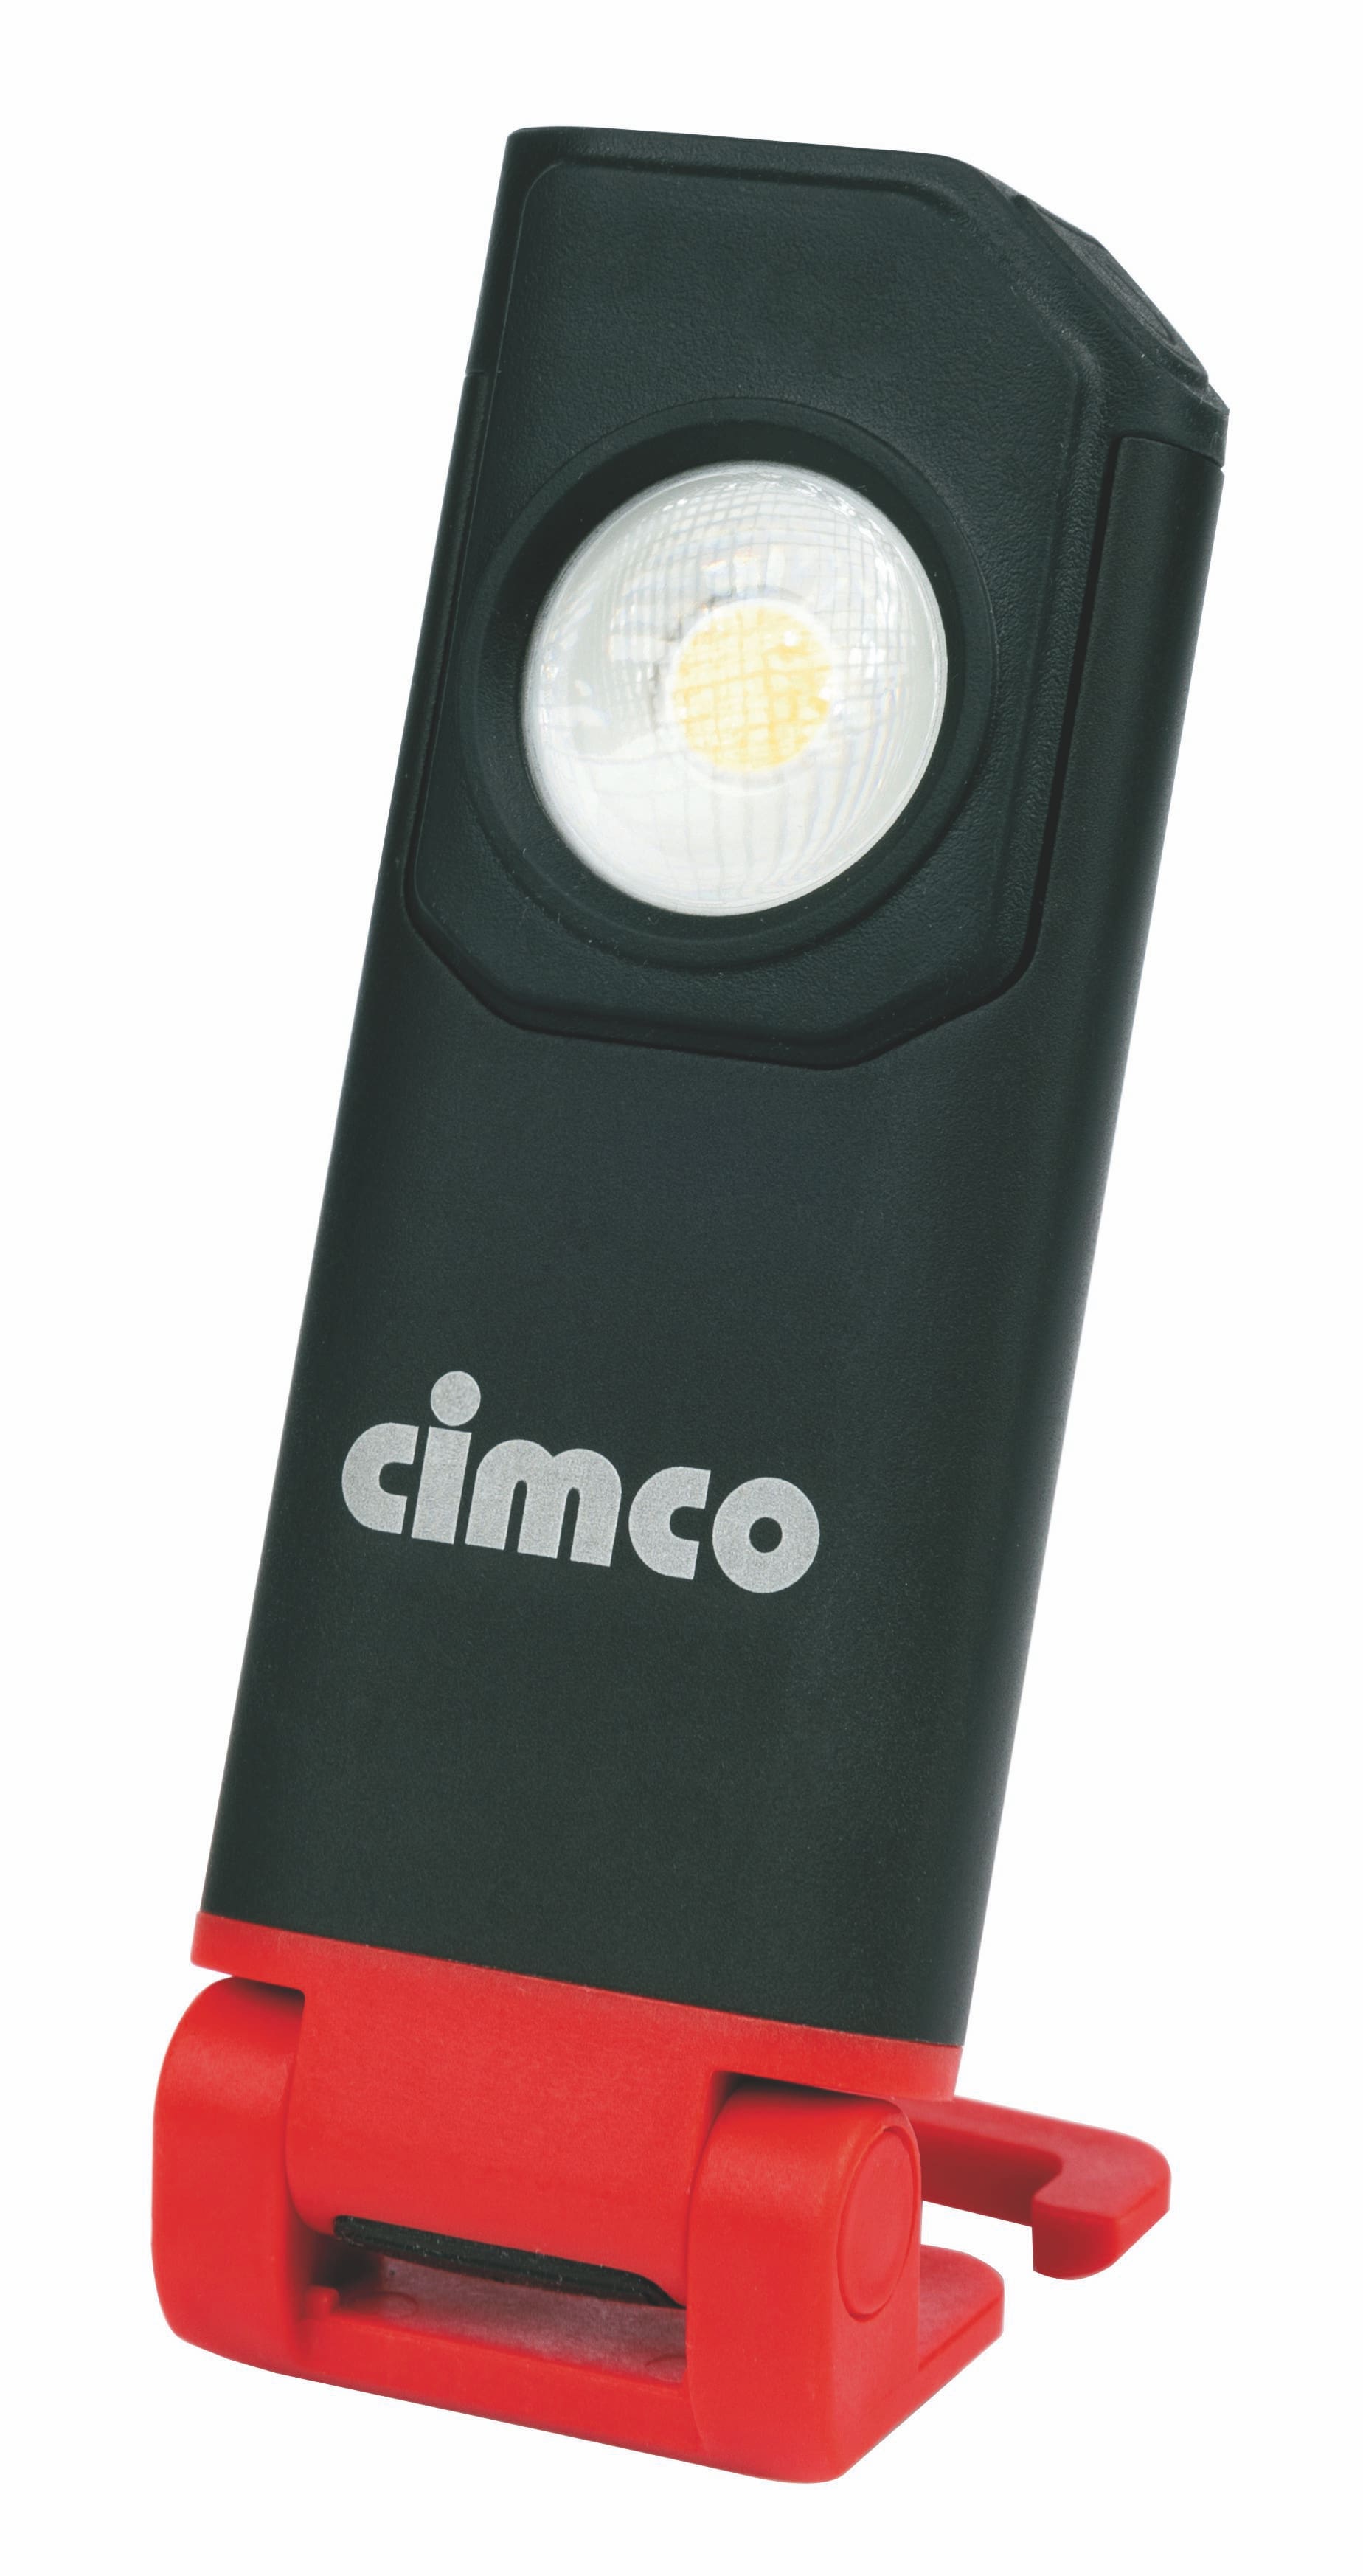 Cimco 11 1575 Taschen- / Handlampe LED Pro Pocket, dimmbar, IP54/IK07, Alu, 350 und 100 lm,  Magnet, Clip